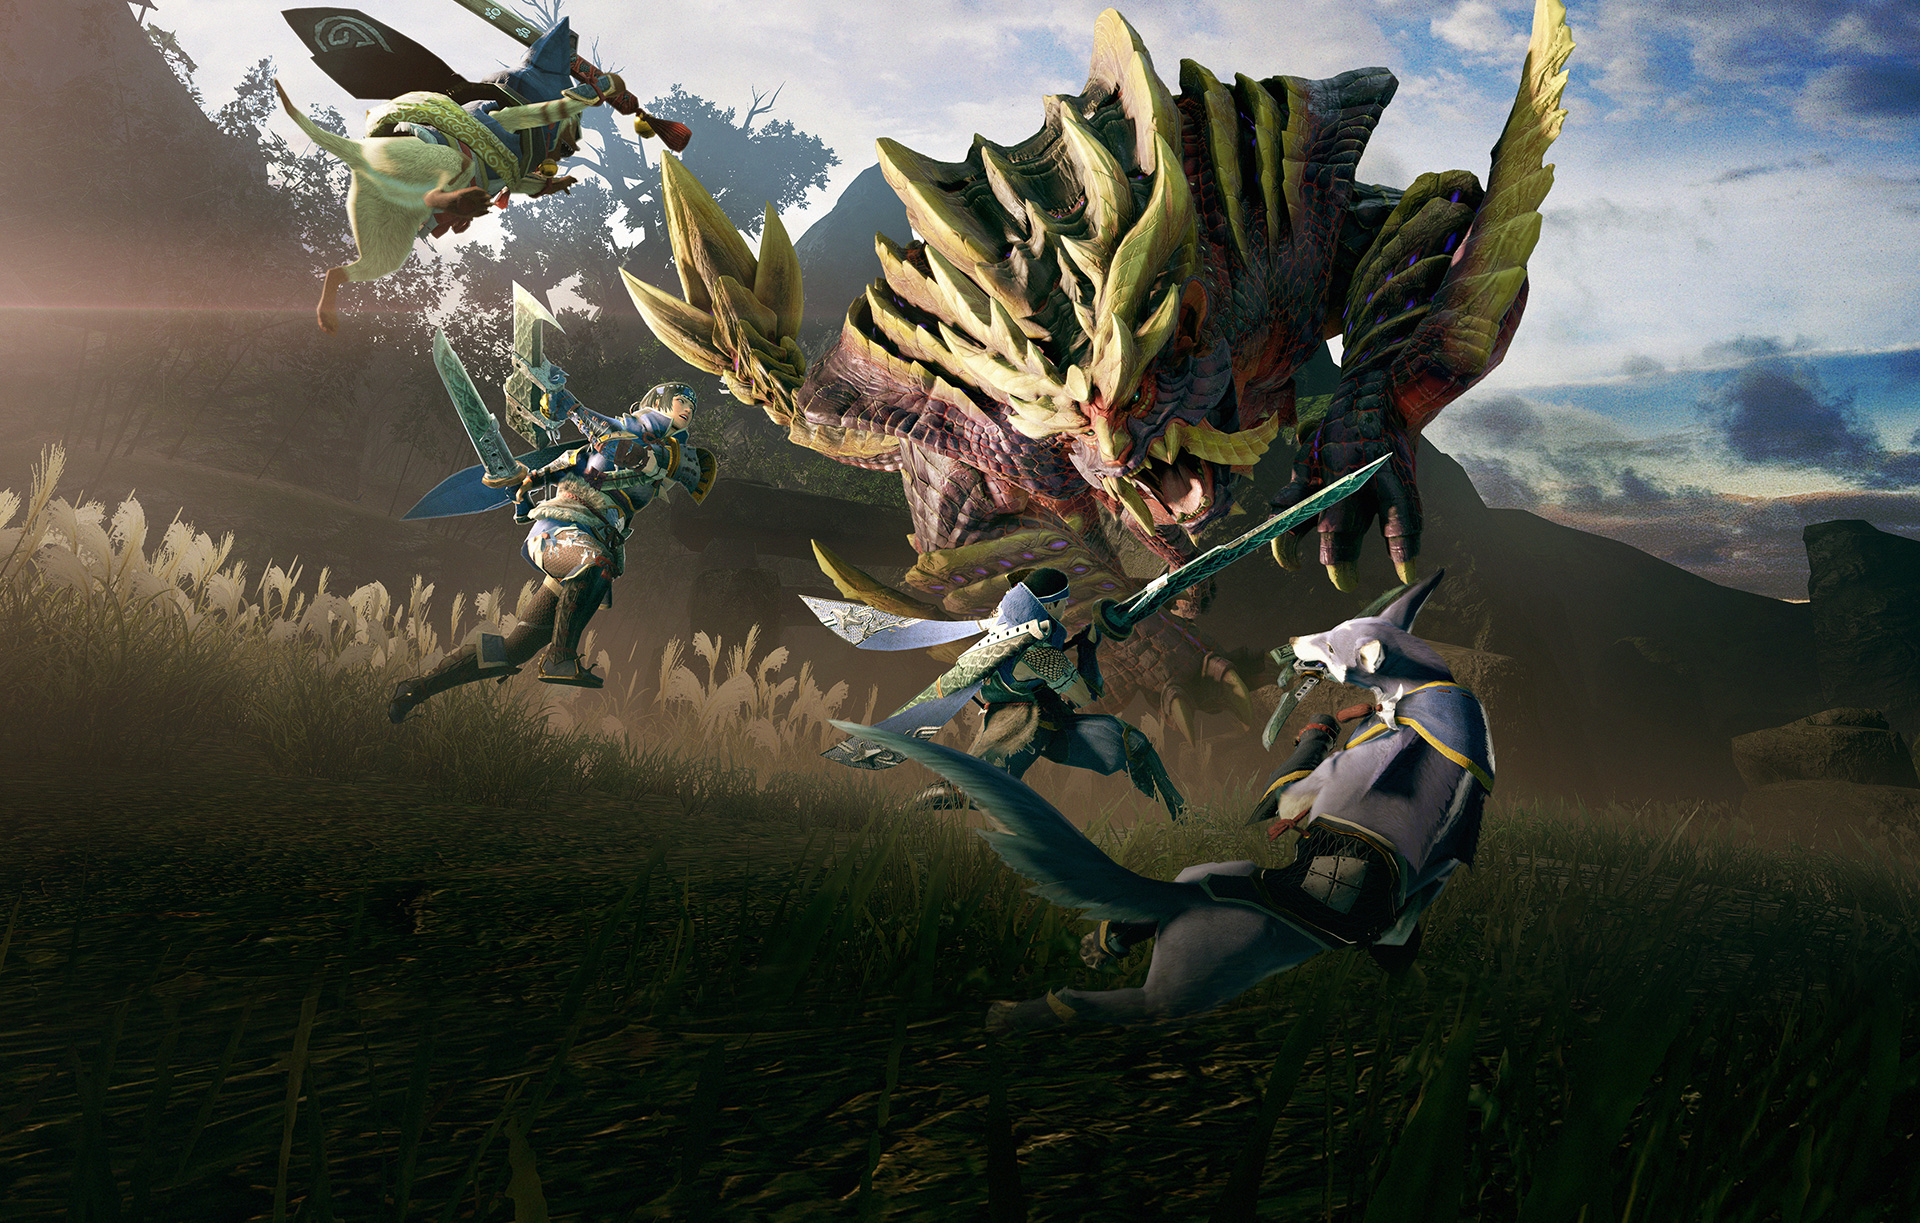 Monster Hunter Rise: Sunbreak, PC Steam Downloadable Content